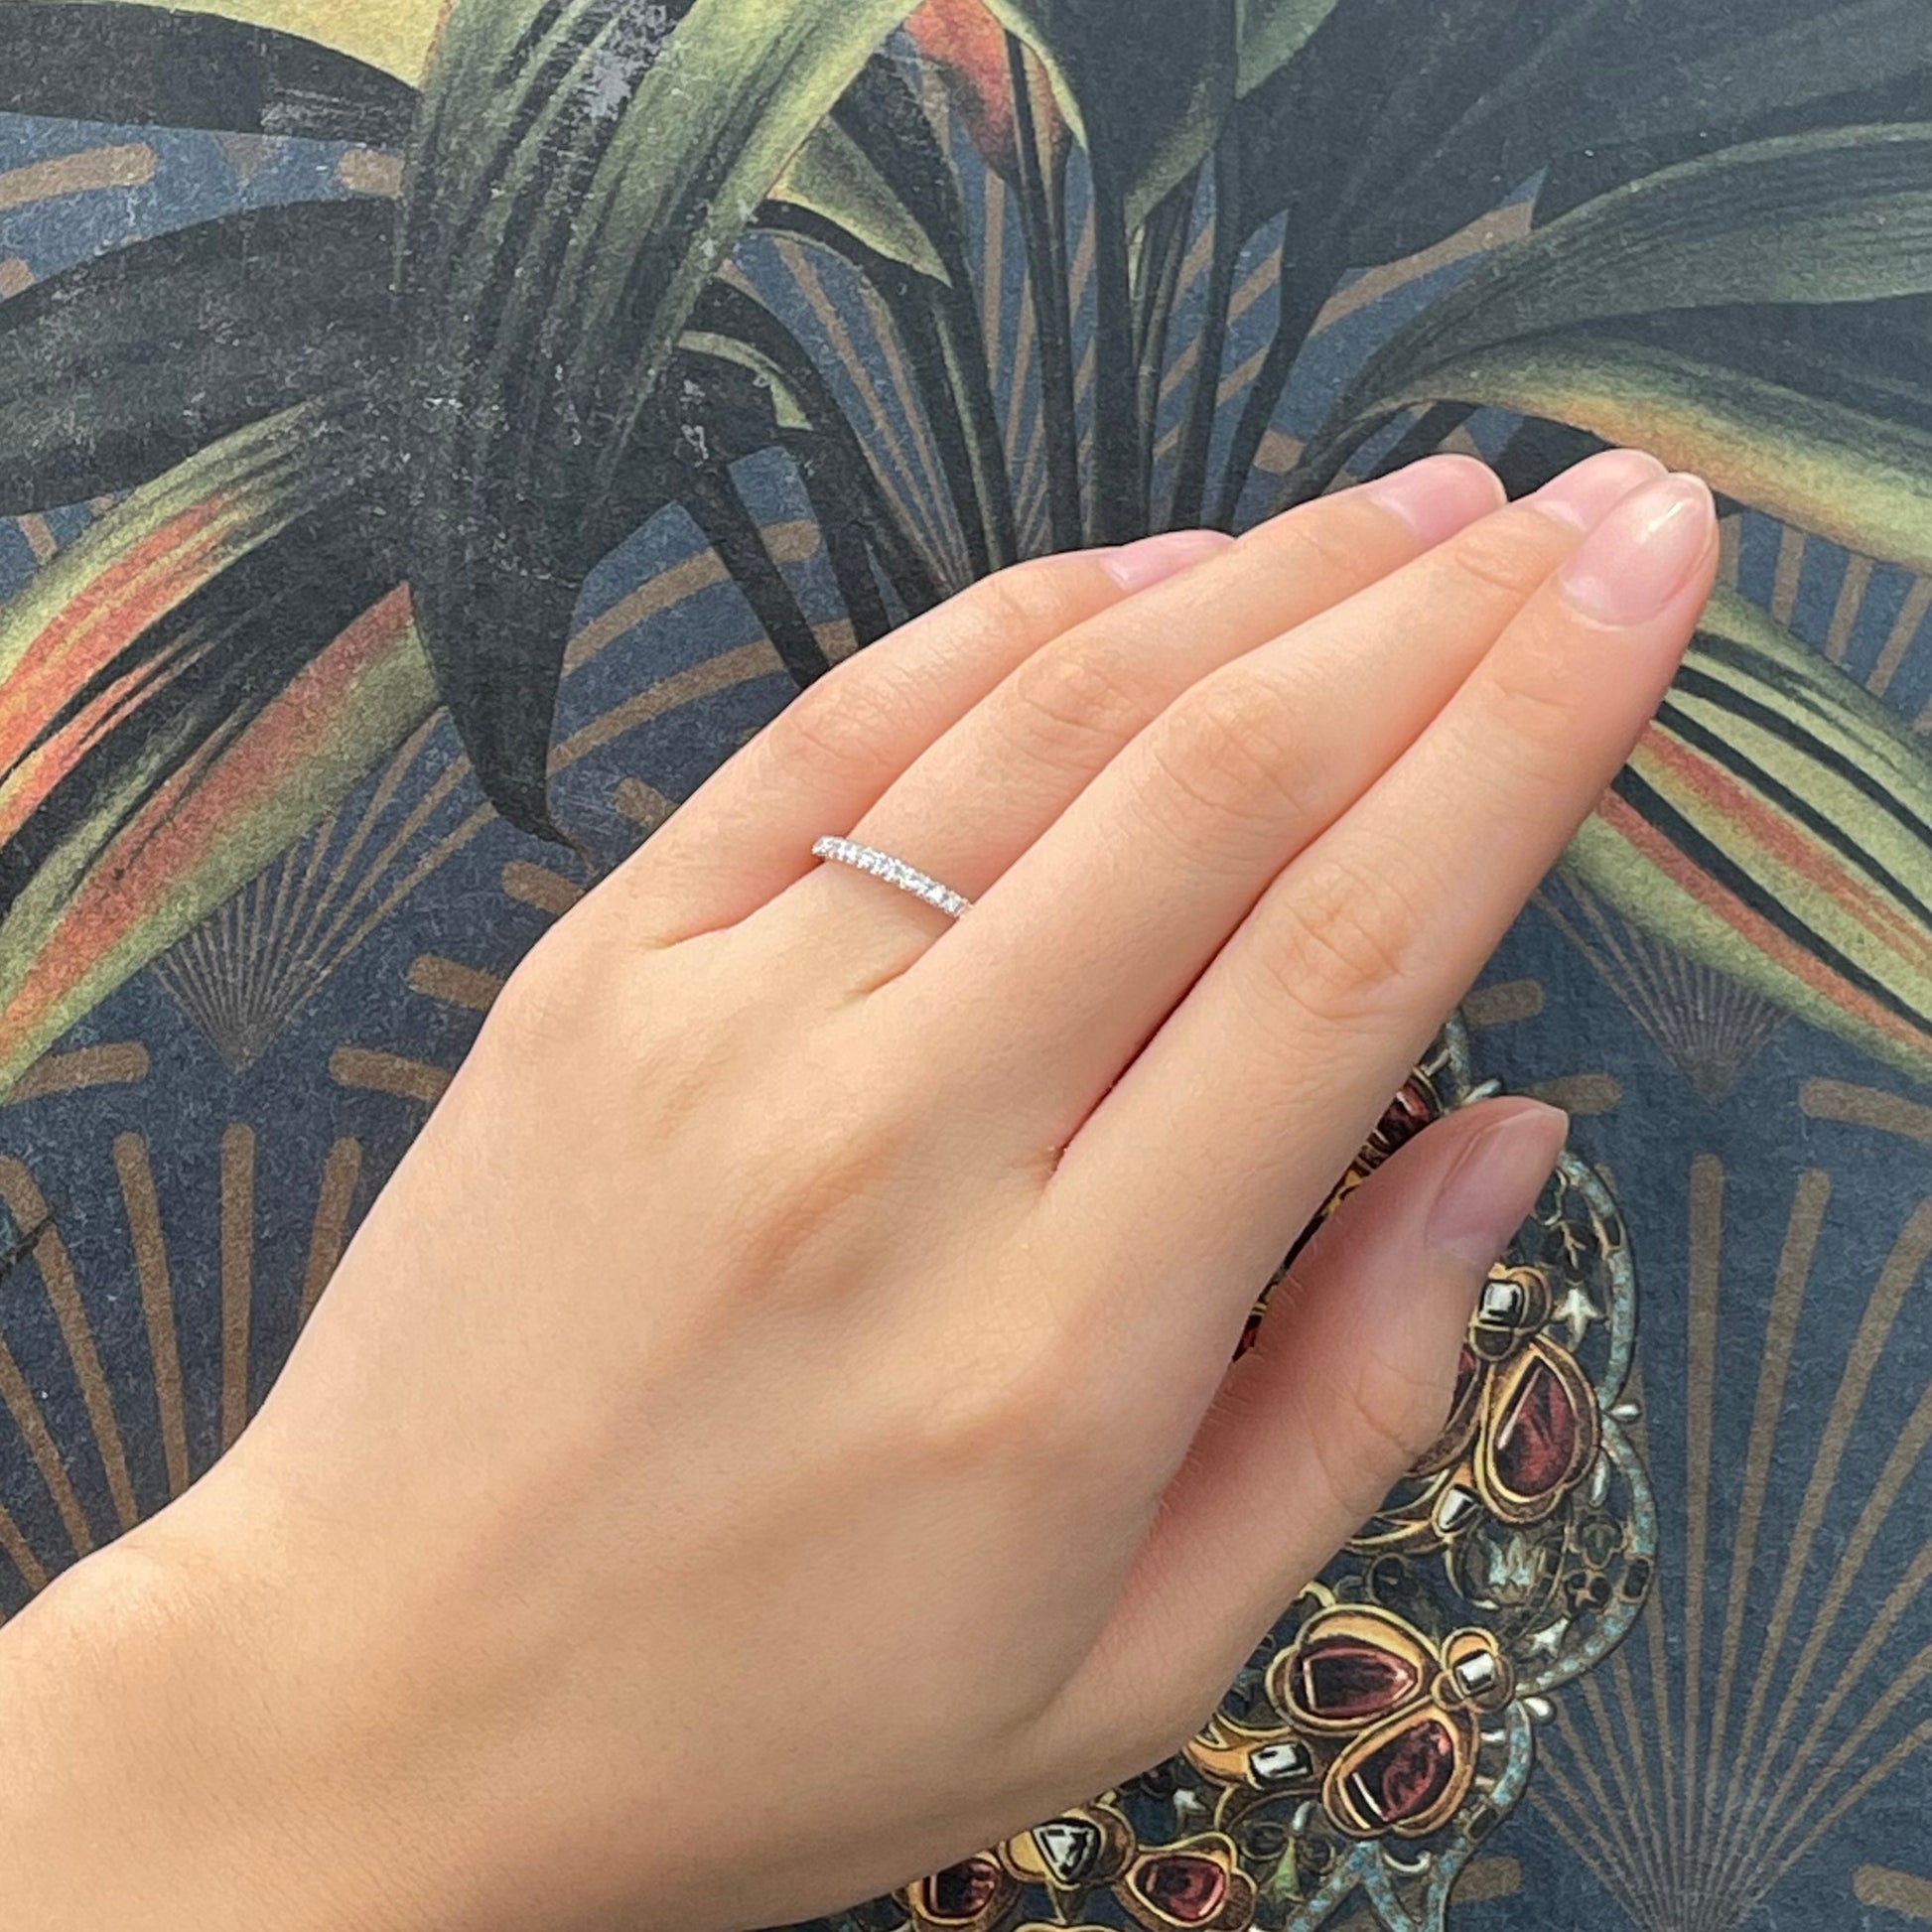   18k白金鑽石戒指在中指上 18k White Gold Eternity Diamond Ring on middle finger